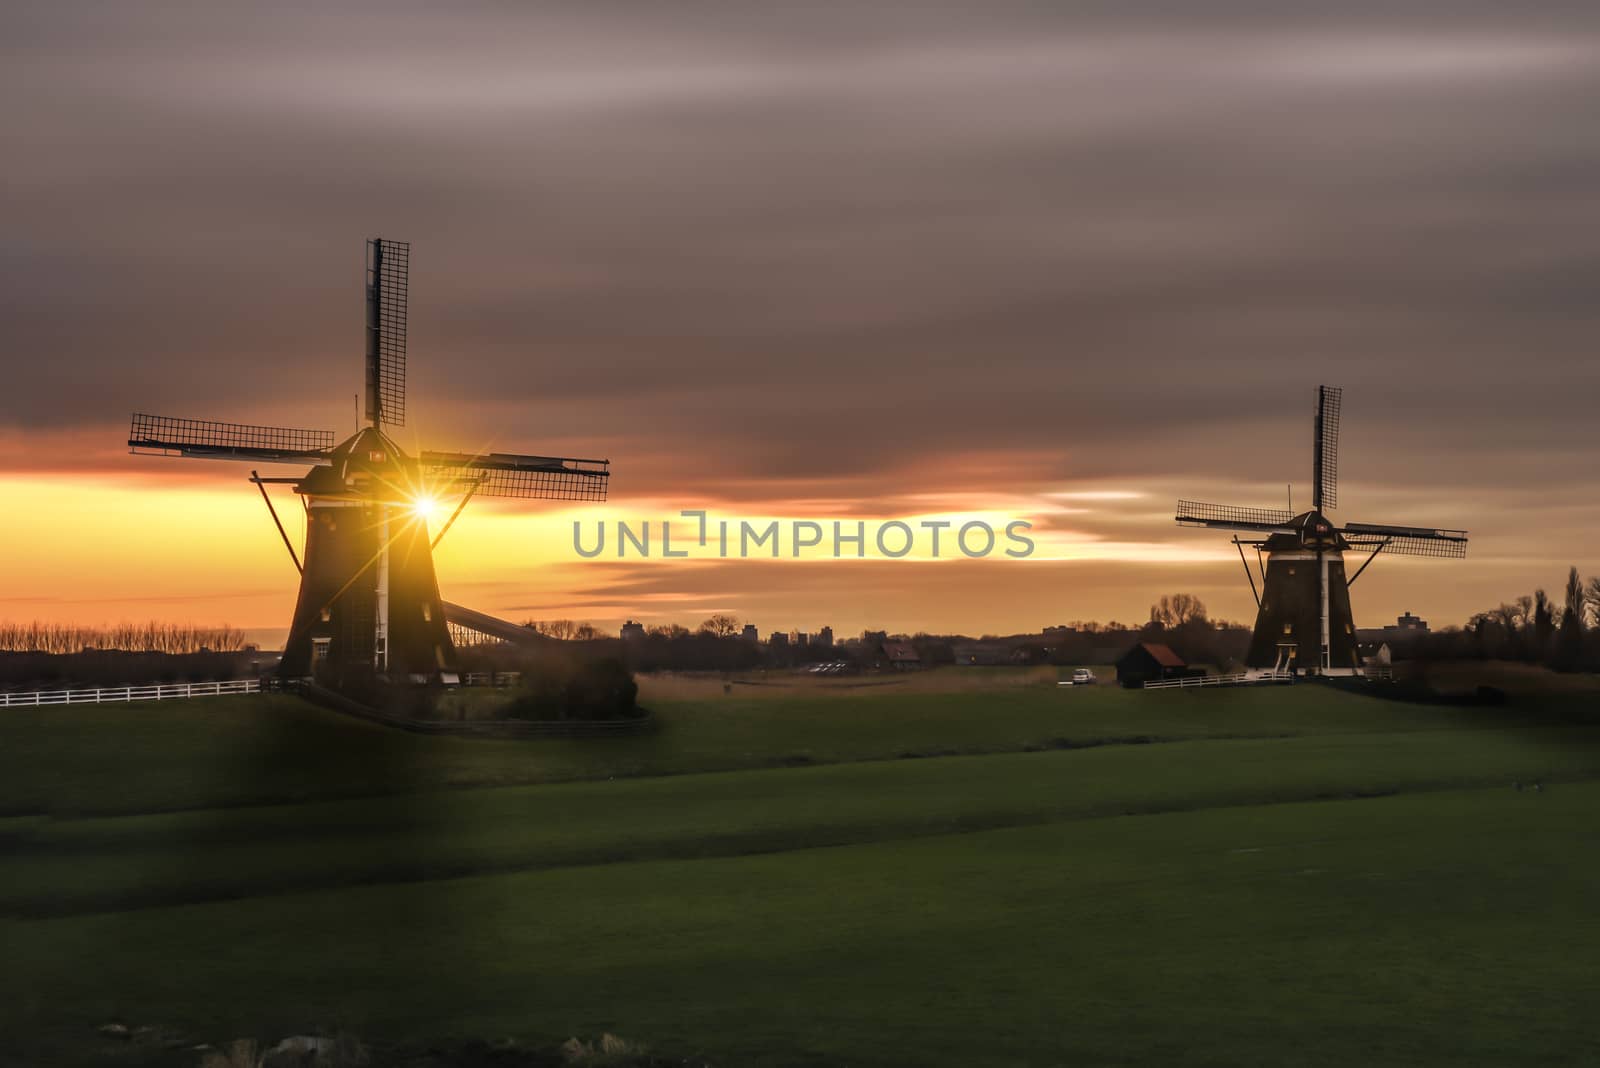 Warm and vibrant sunrise over the Unesco world heritage windmill in Leidschendam, Kinderdijk, Netherlands  by ankorlight